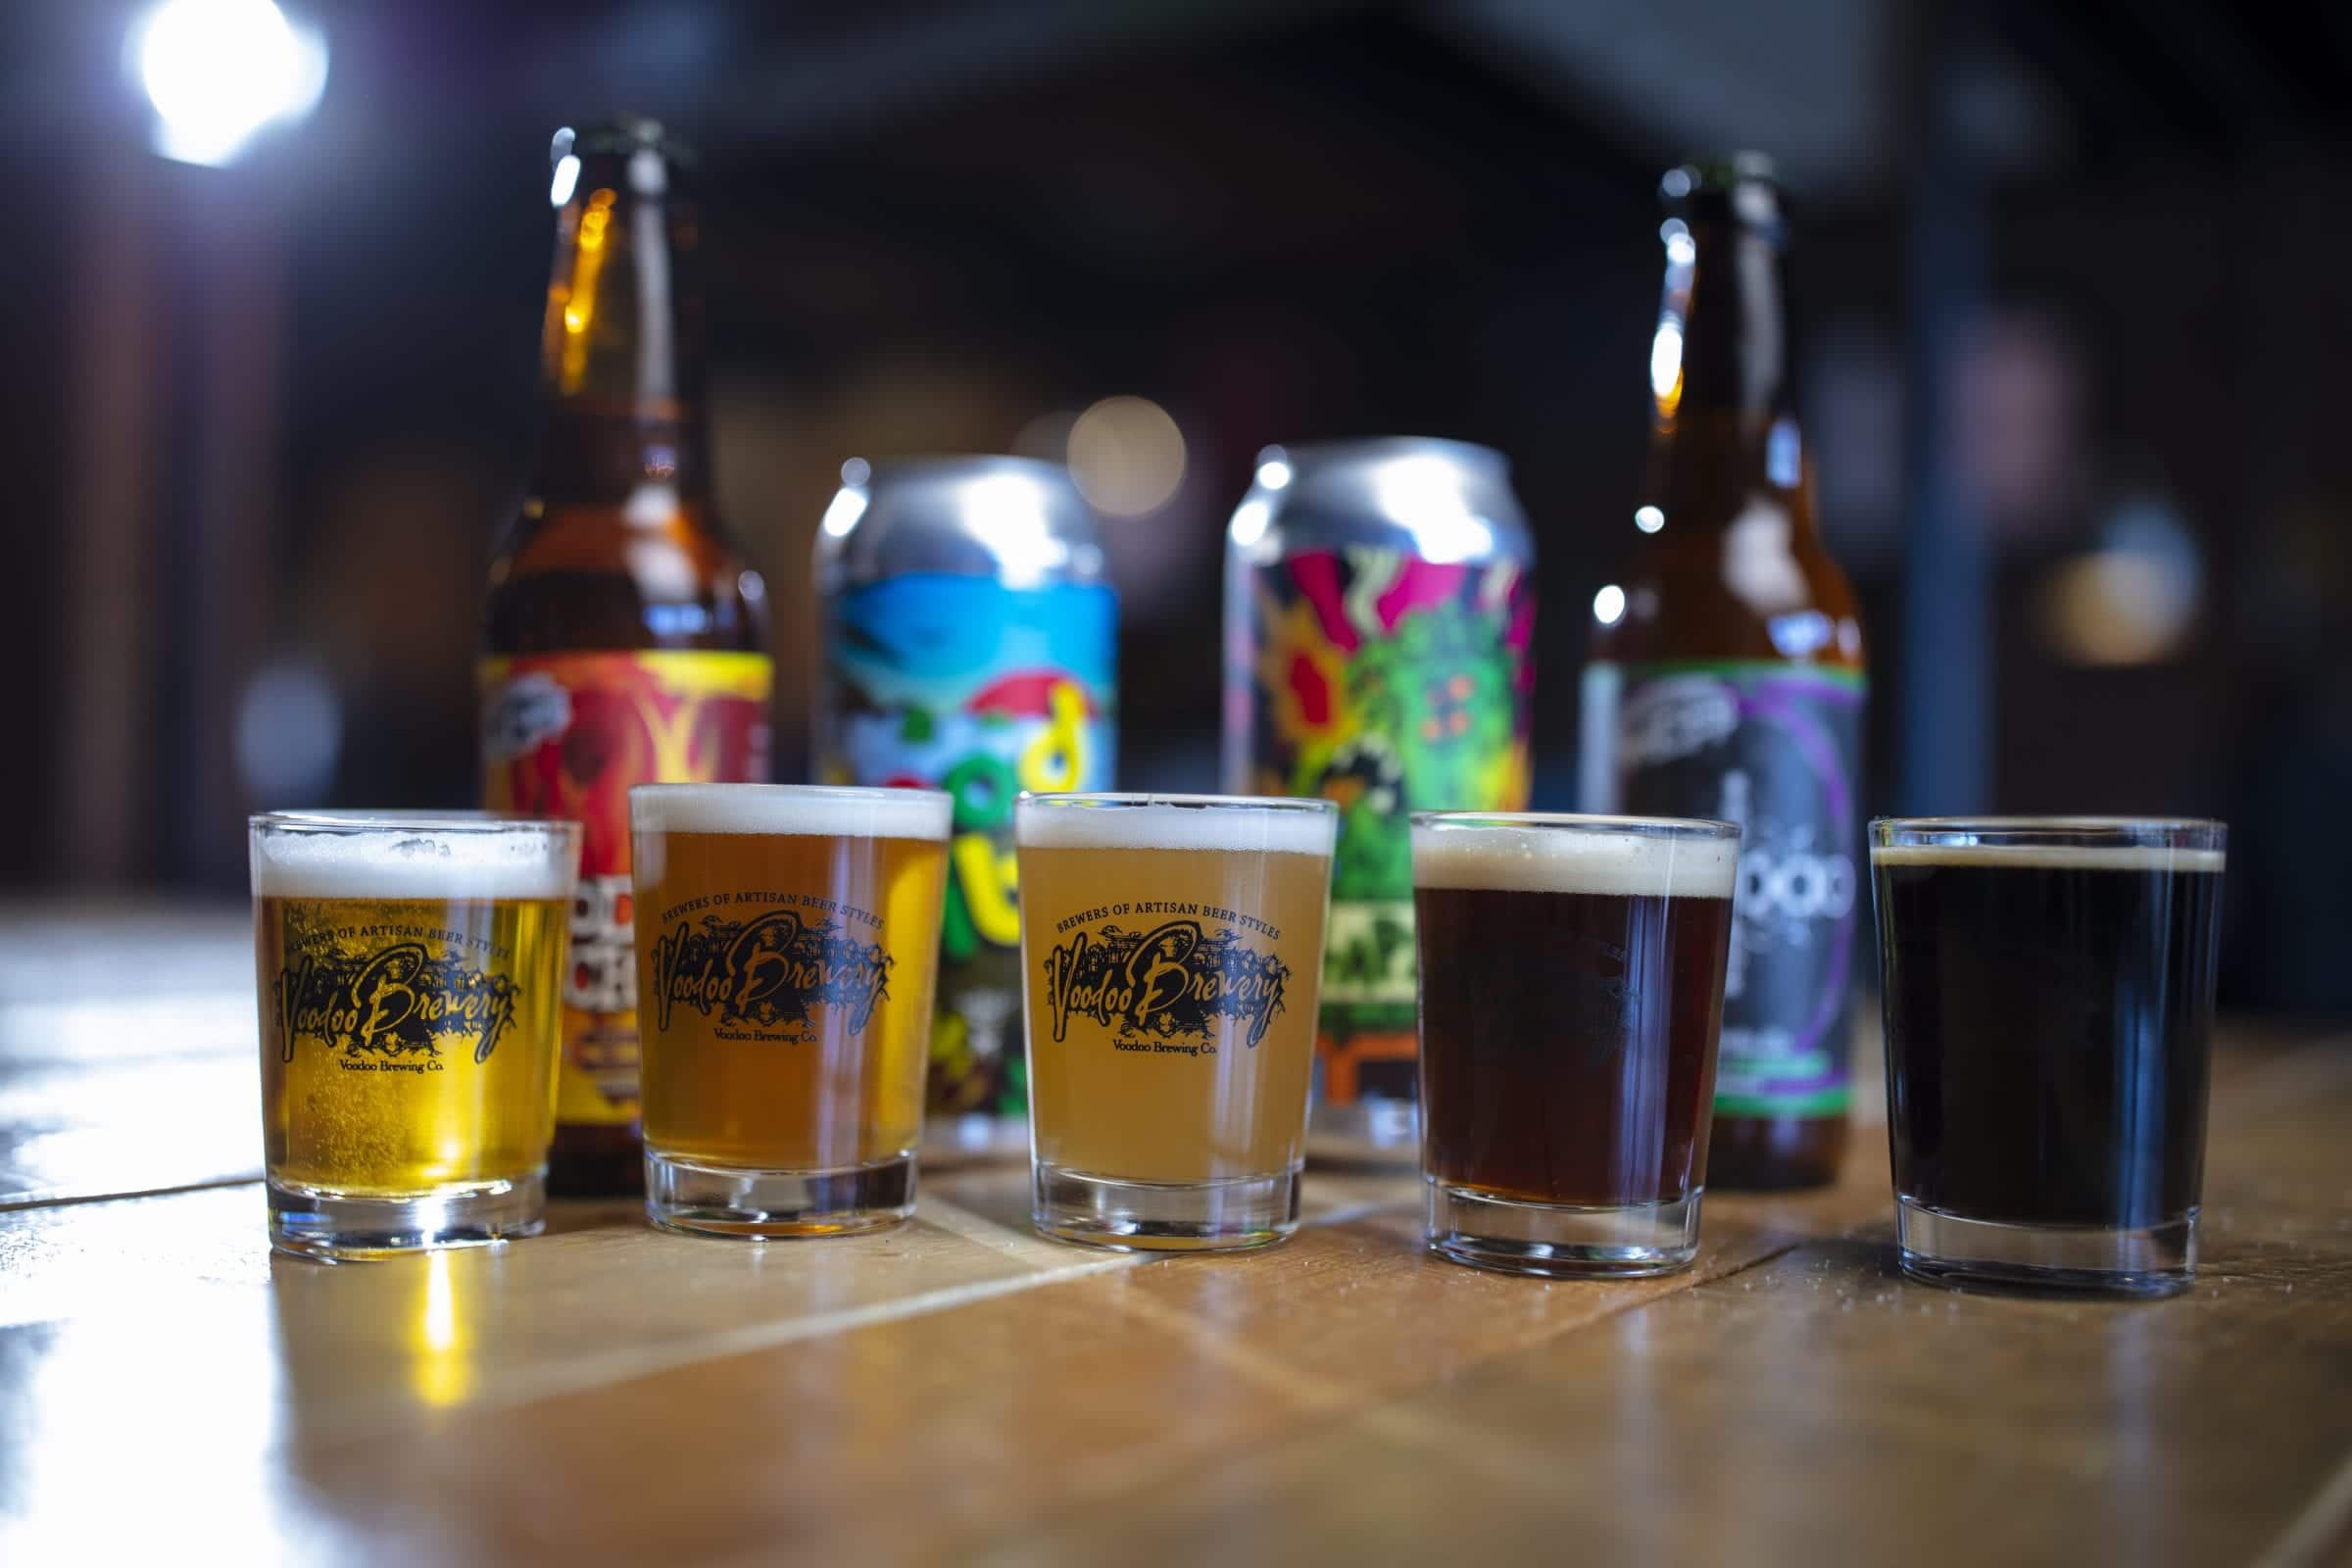 voodoo brewery franchise bar shot